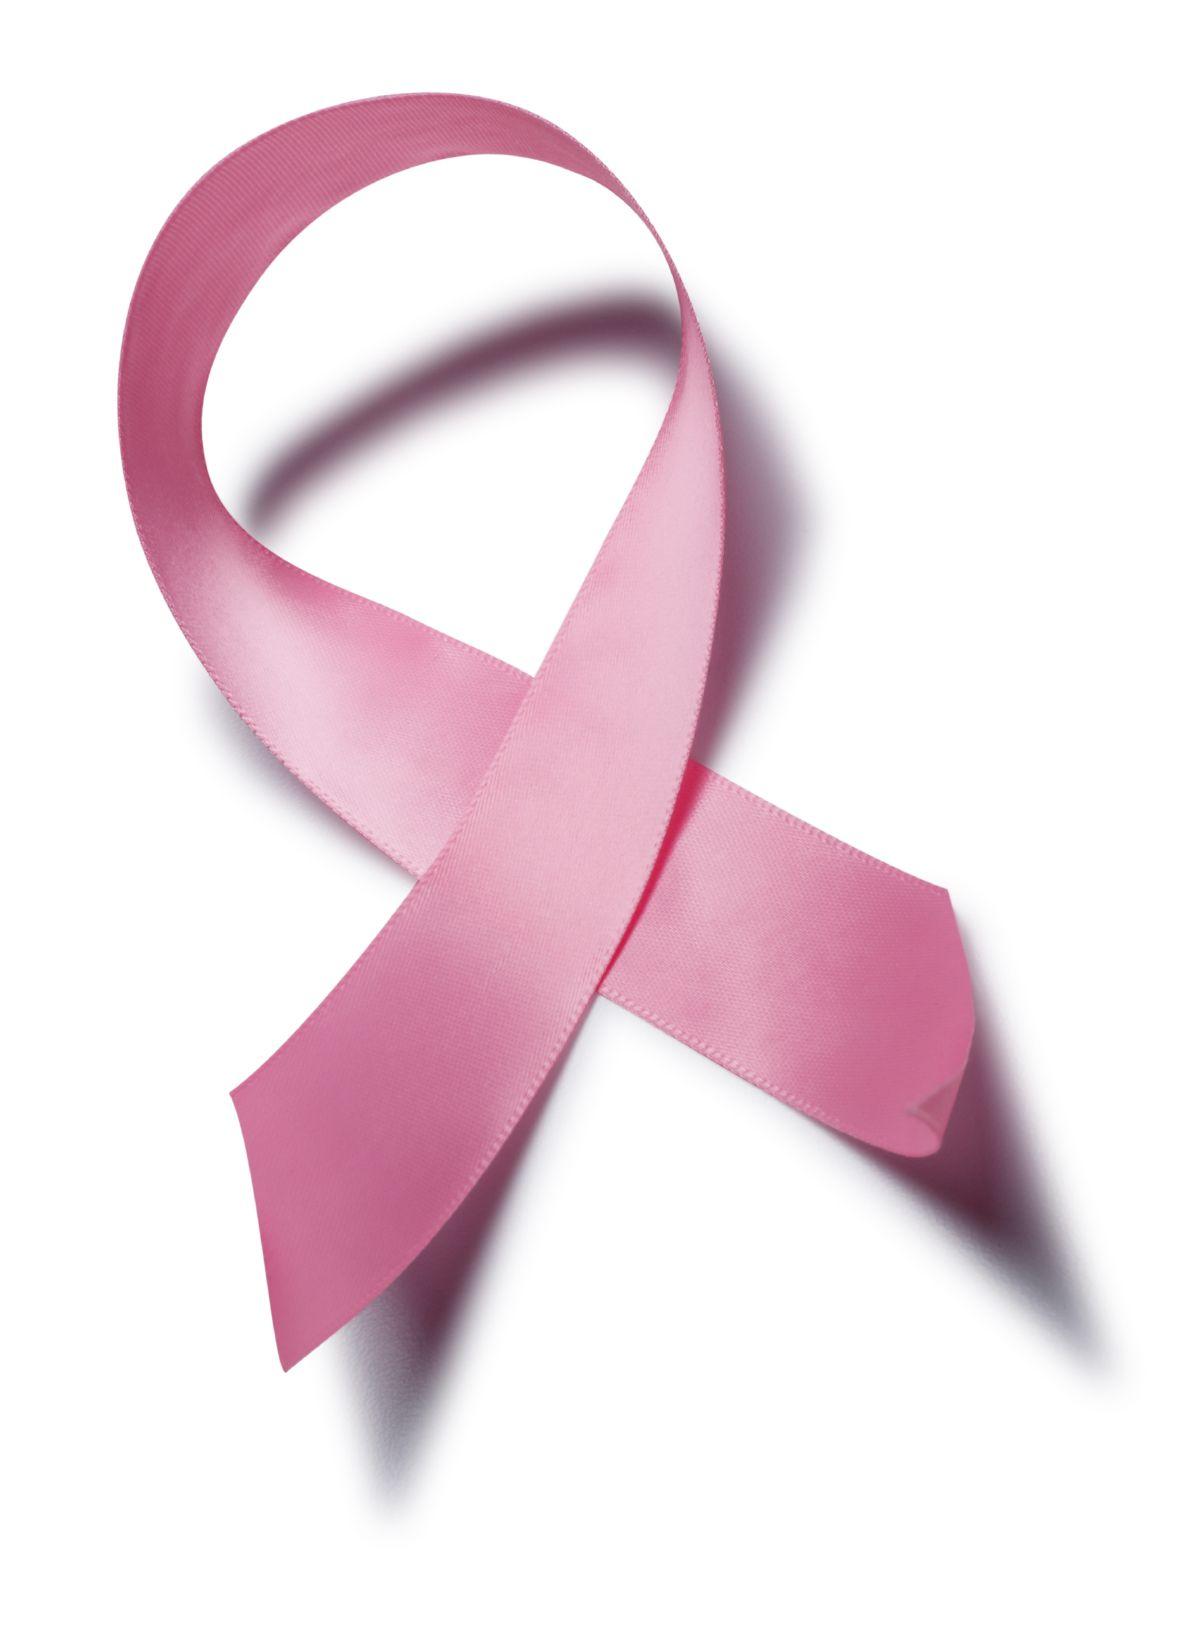 Pink October Logo - Pink October – Breast Cancer Awareness | Colors of Fashion